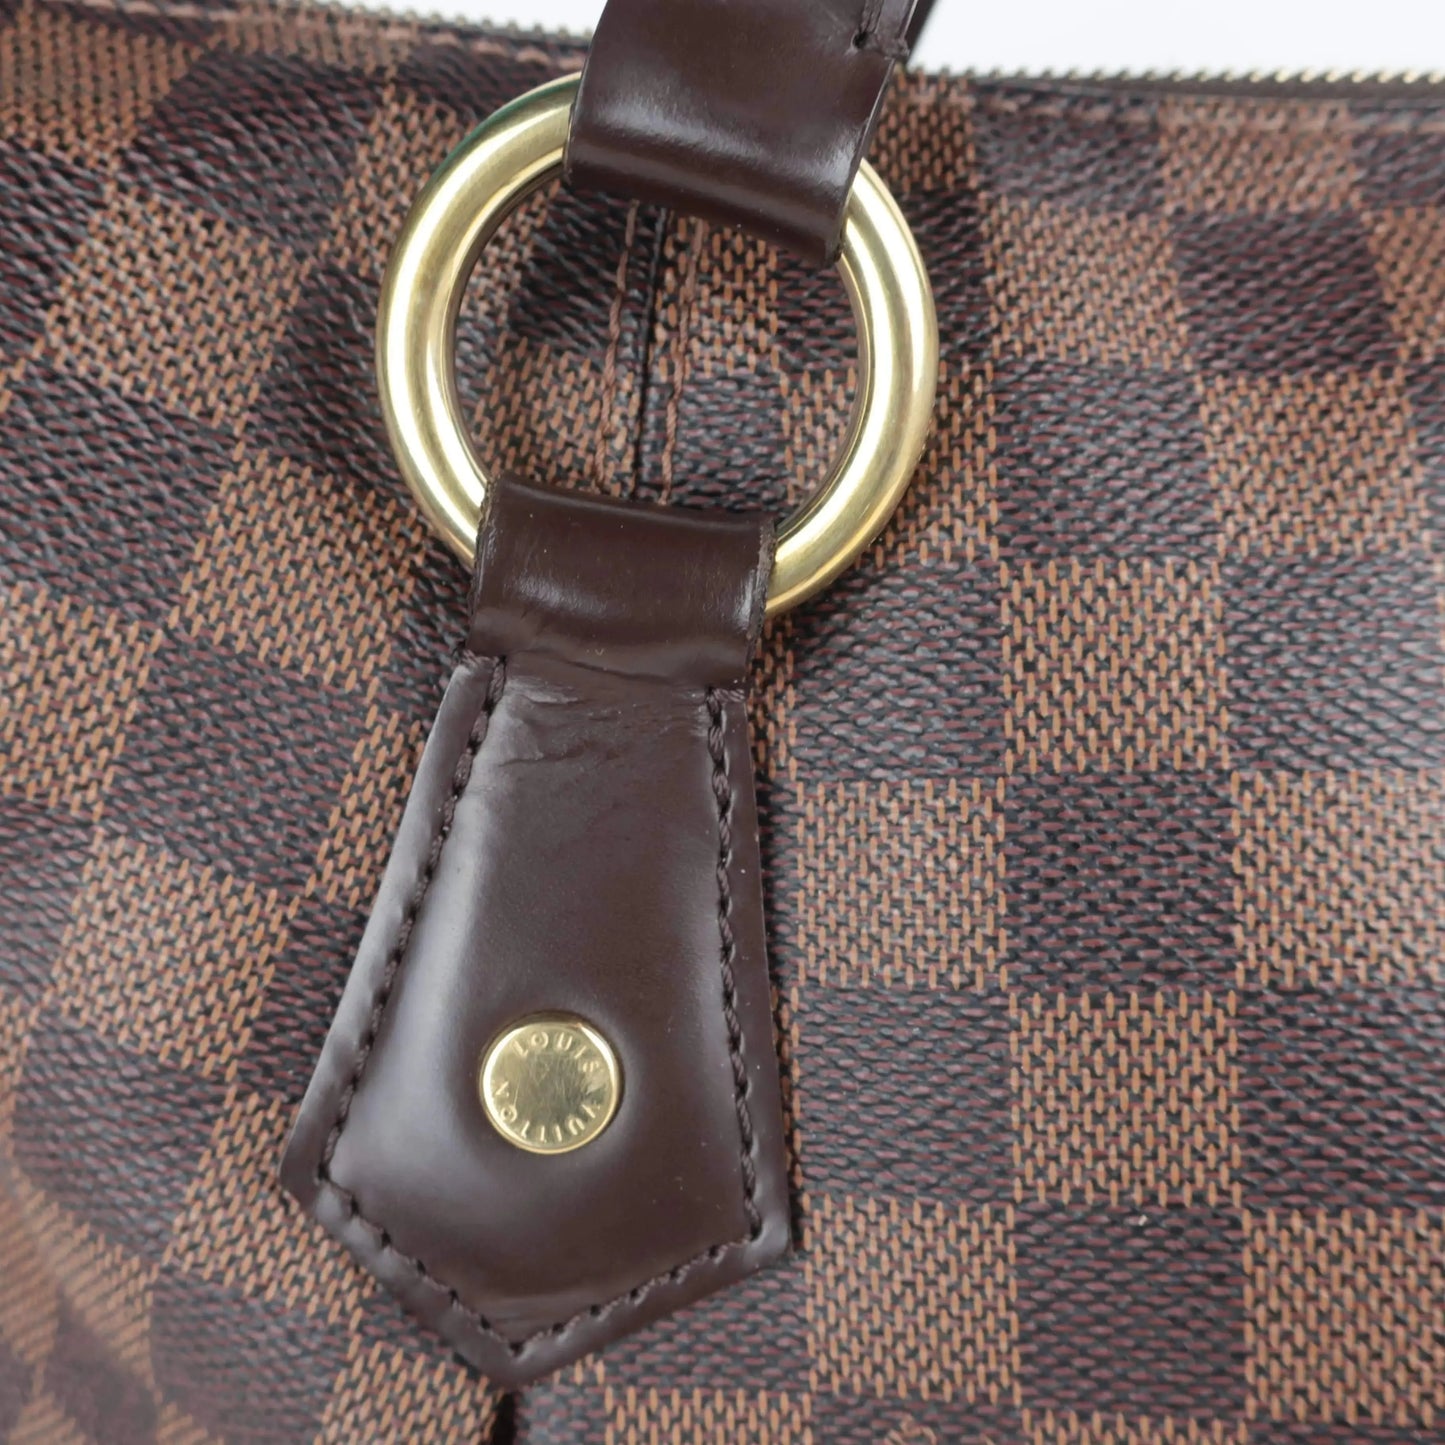 Louis Vuitton Evora GM Damier Ebene Tote Bag in Brown | Lord & Taylor